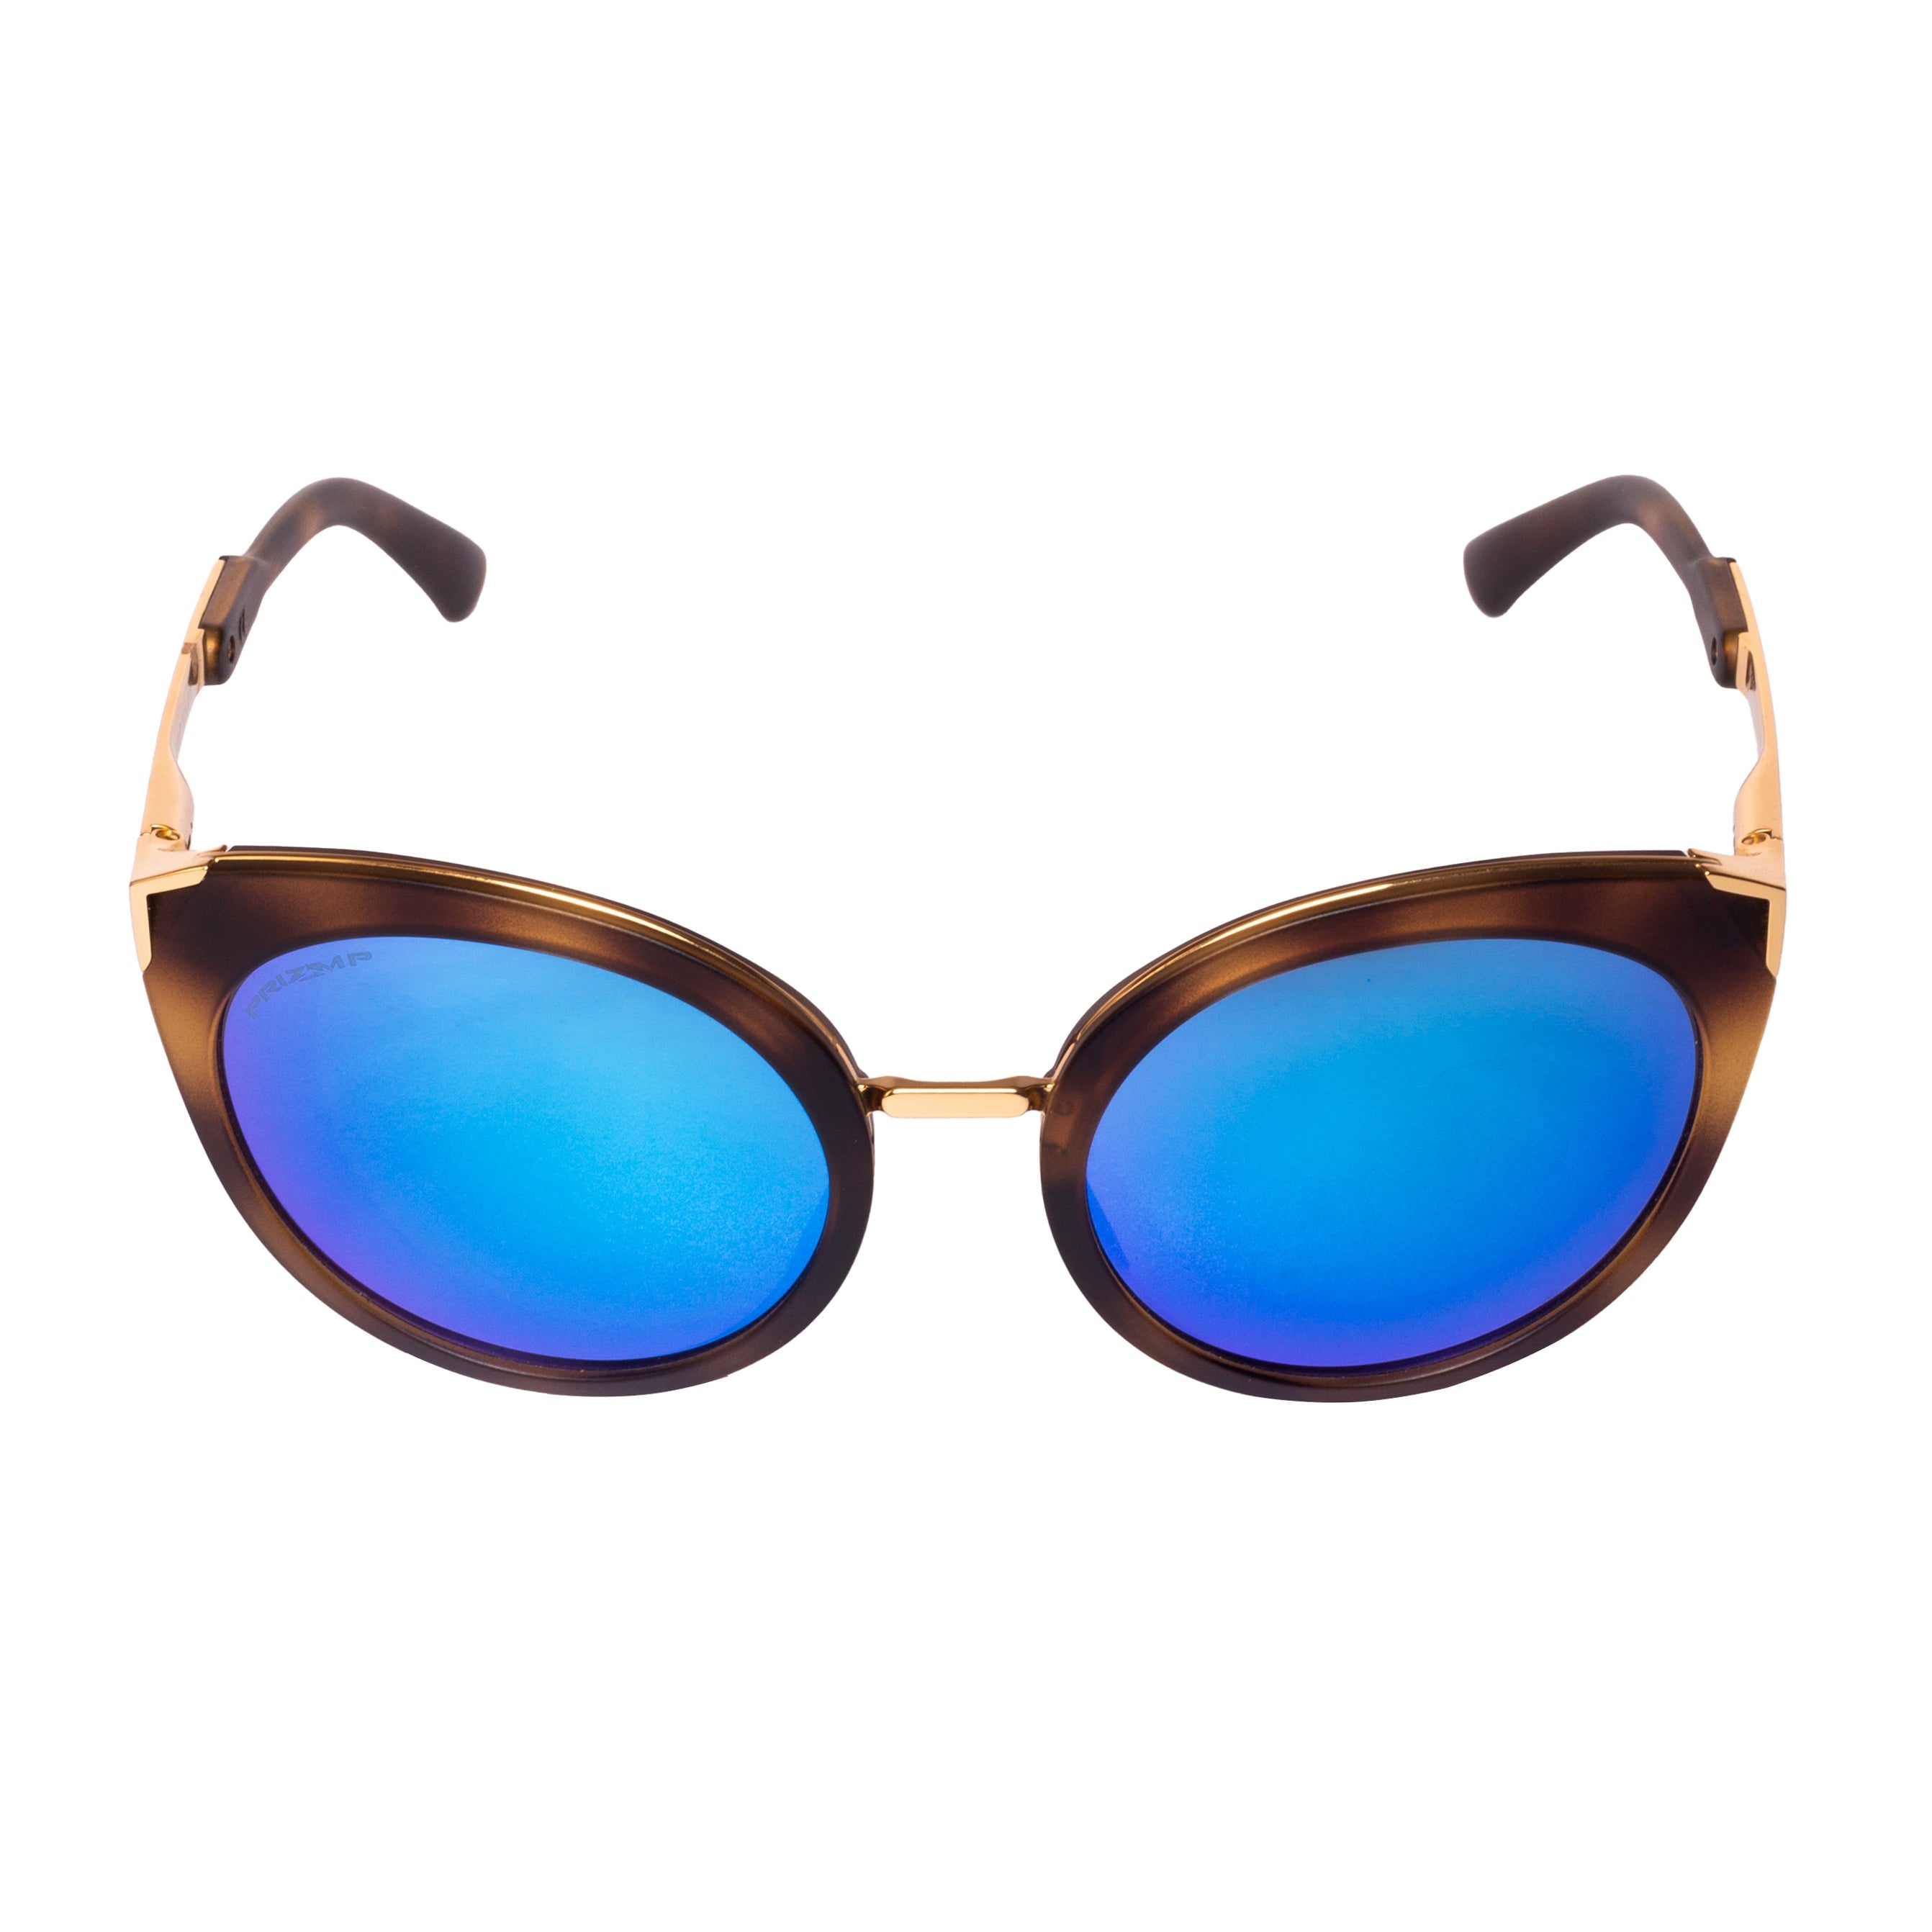 Oakley-OO9434-56-943406 Sunglasses - Premium Sunglasses from Oakley - Just Rs. 10890! Shop now at Laxmi Opticians